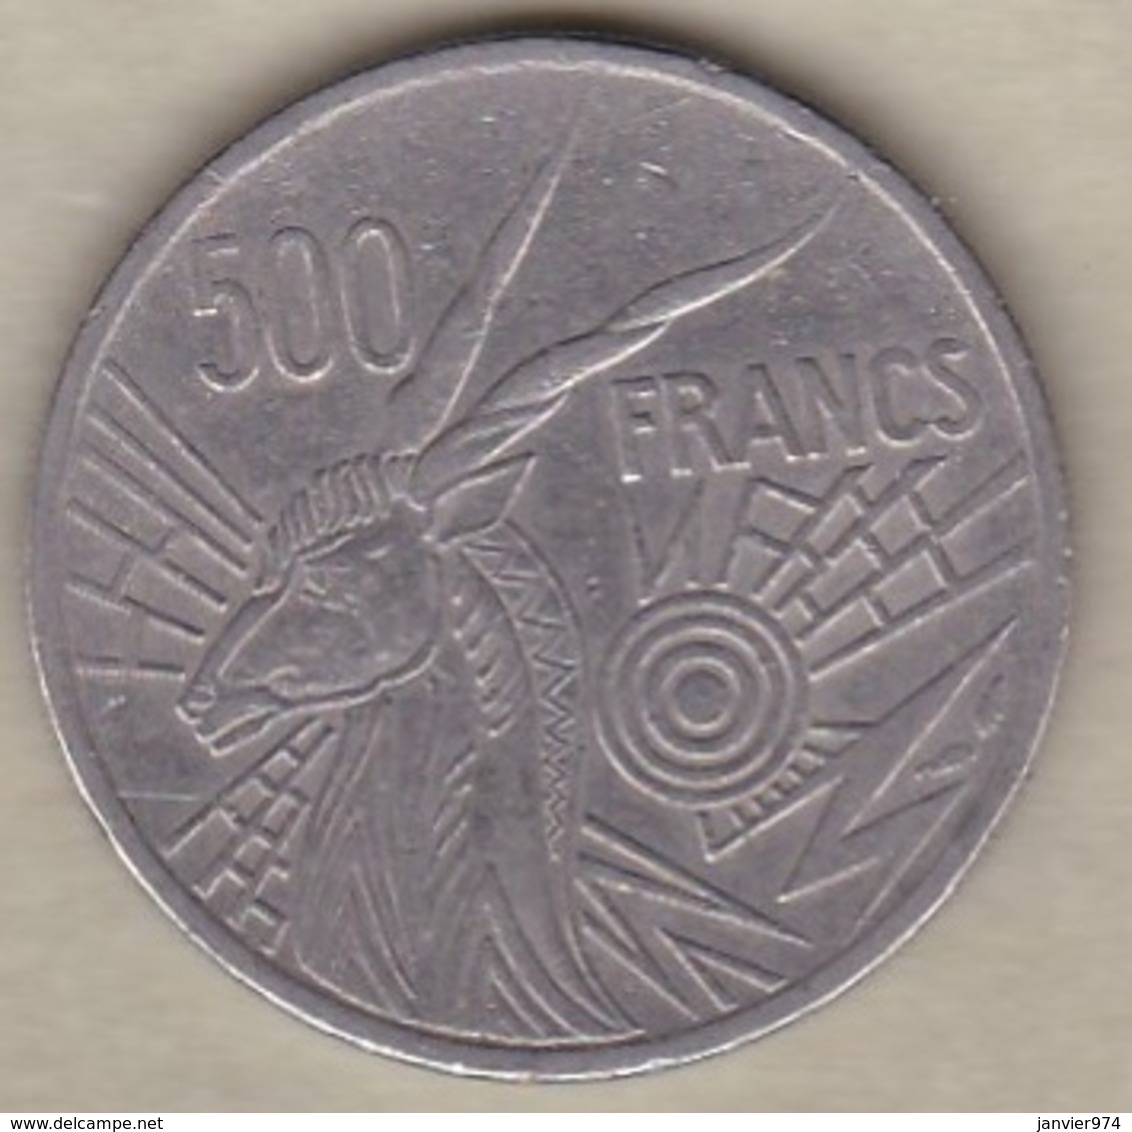 Banque Des Etats De L'Afrique Centrale. 500 Francs 1976 E Cameroun, En Nickel, KM# 12 - Camerún